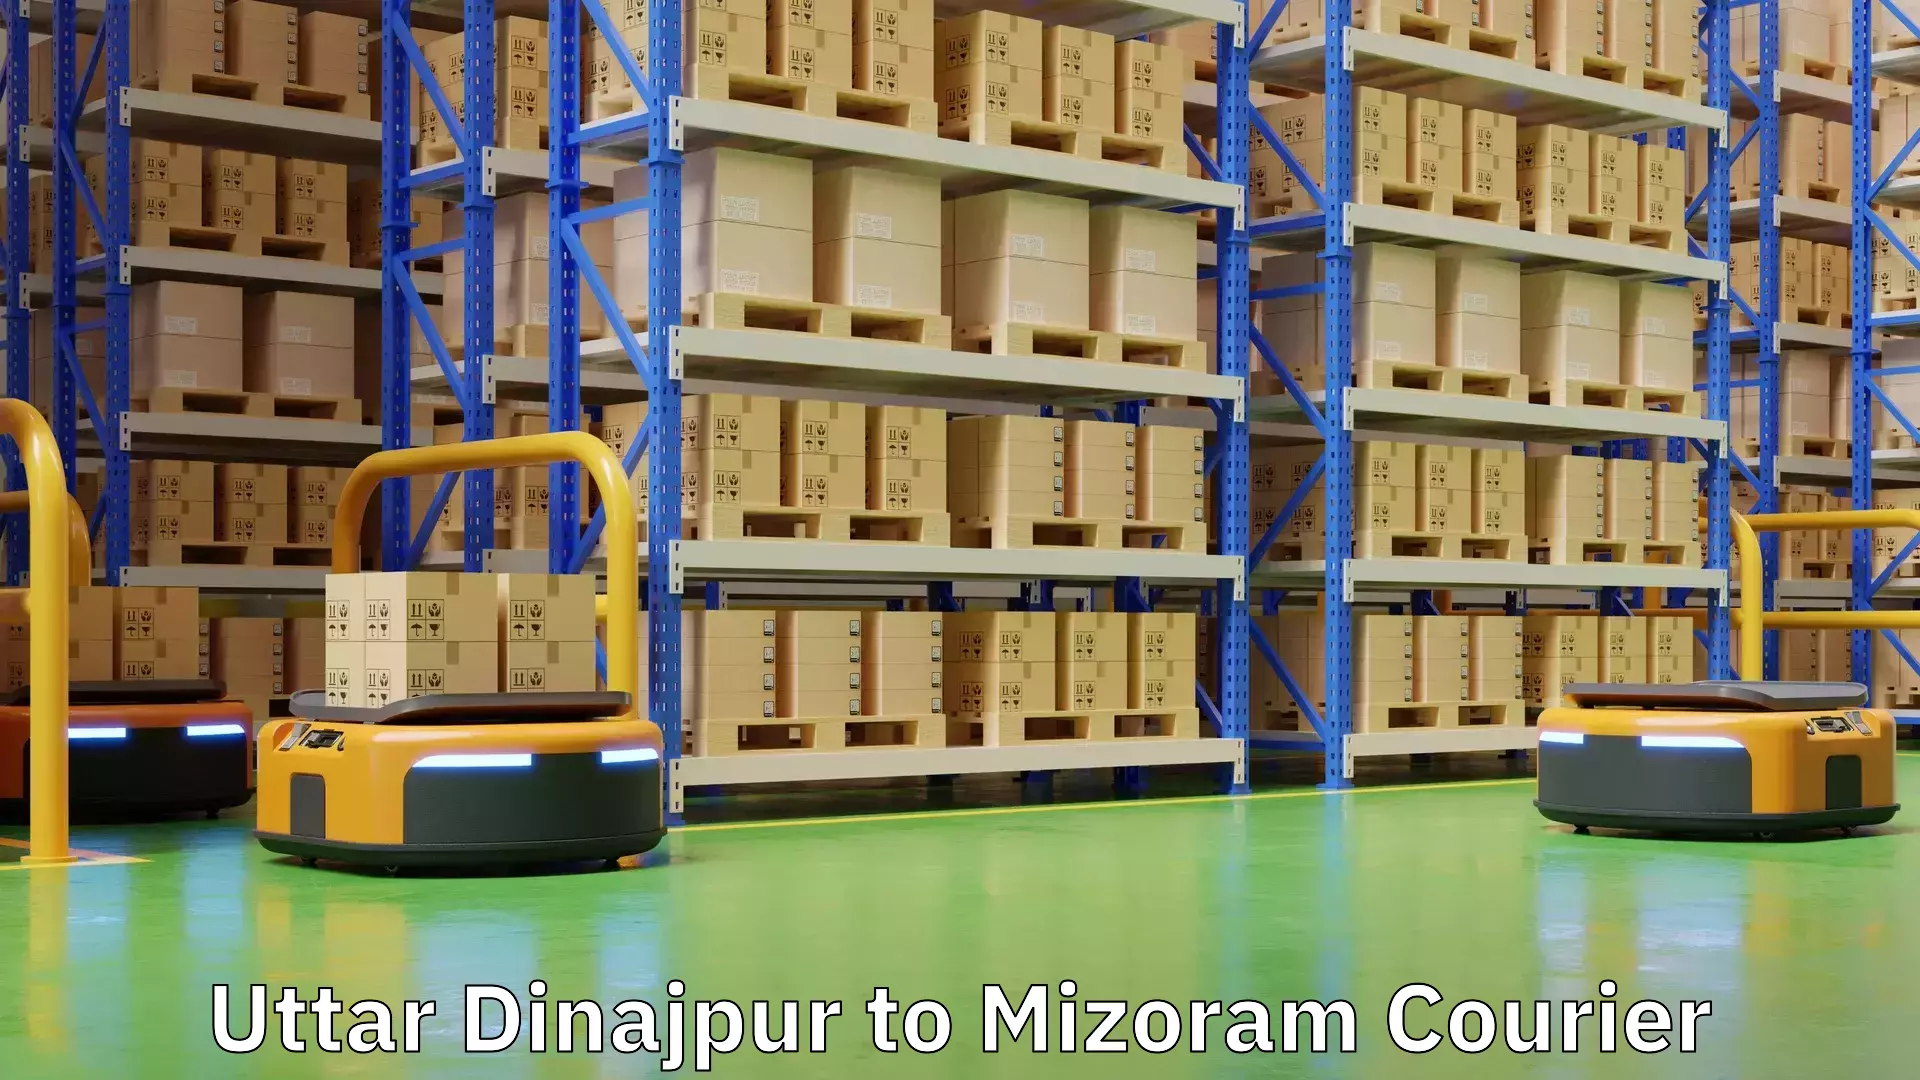 Professional courier handling Uttar Dinajpur to Mizoram